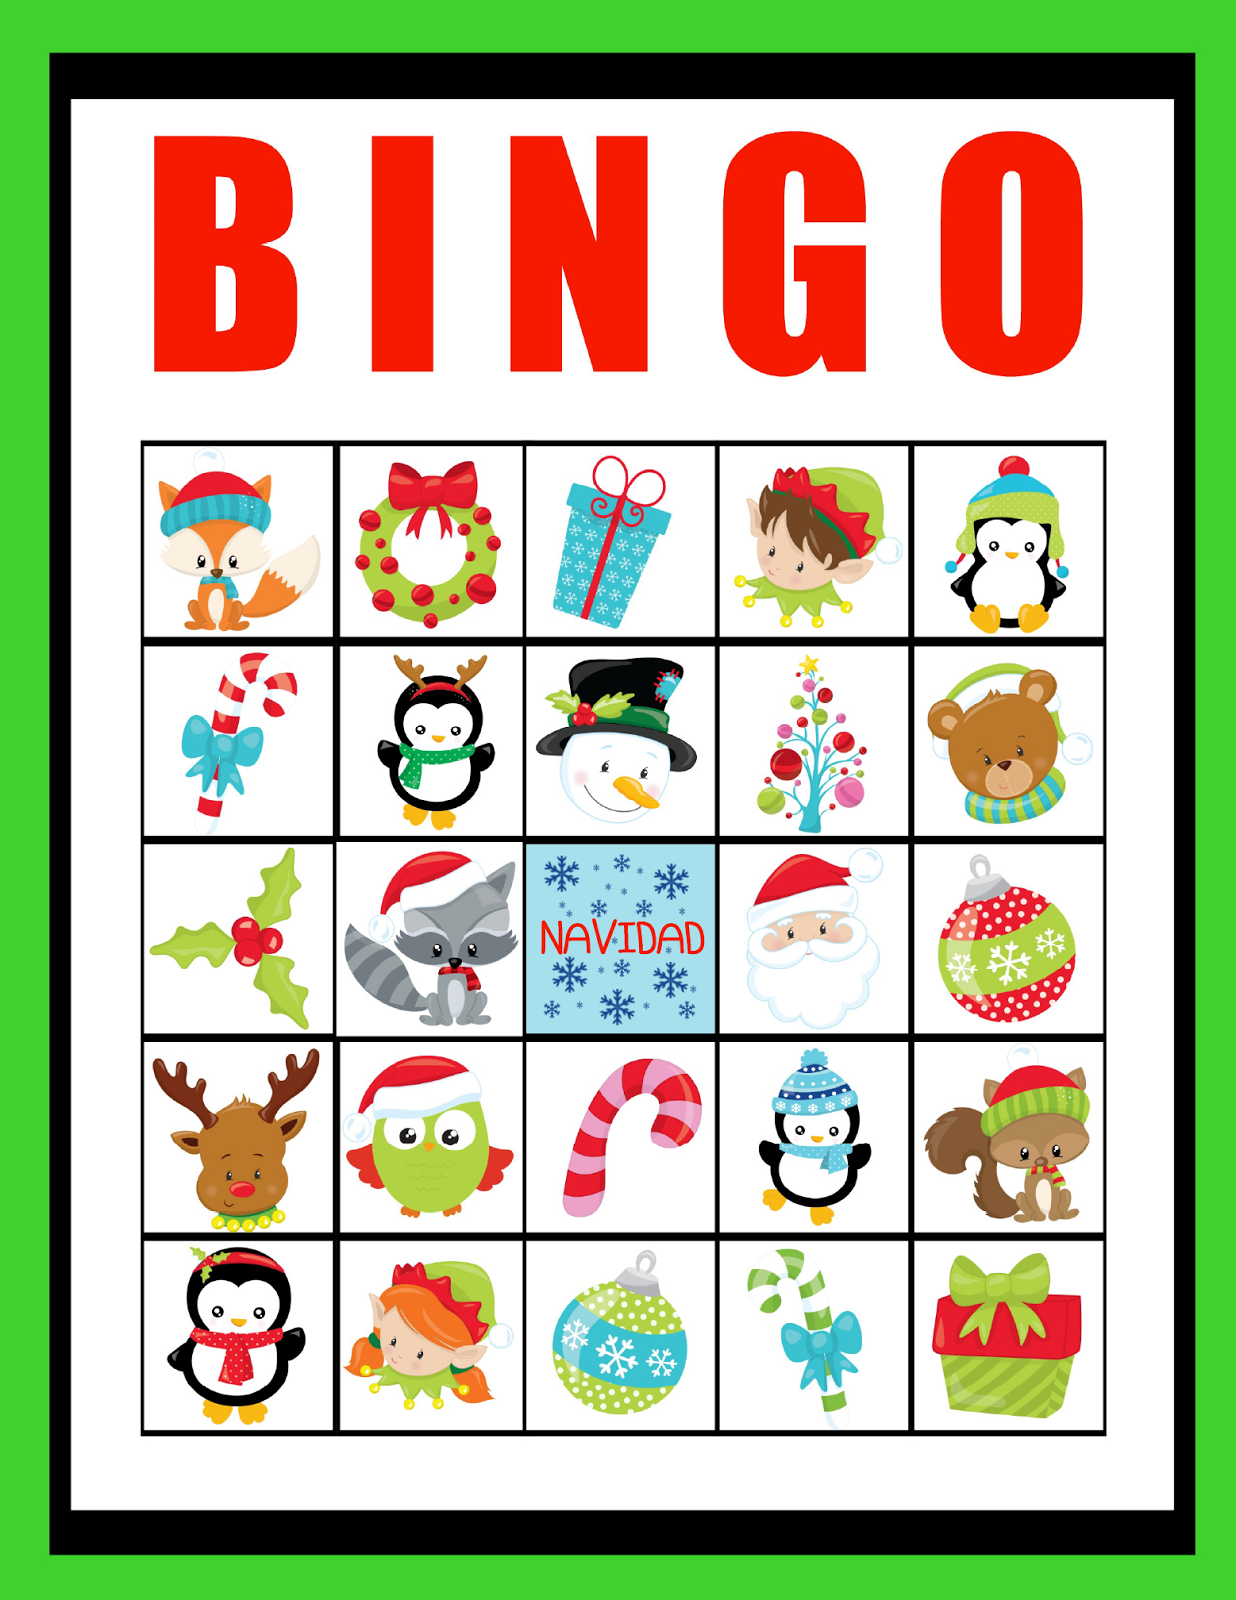 actividades-para-educaci-n-infantil-bingo-navide-o